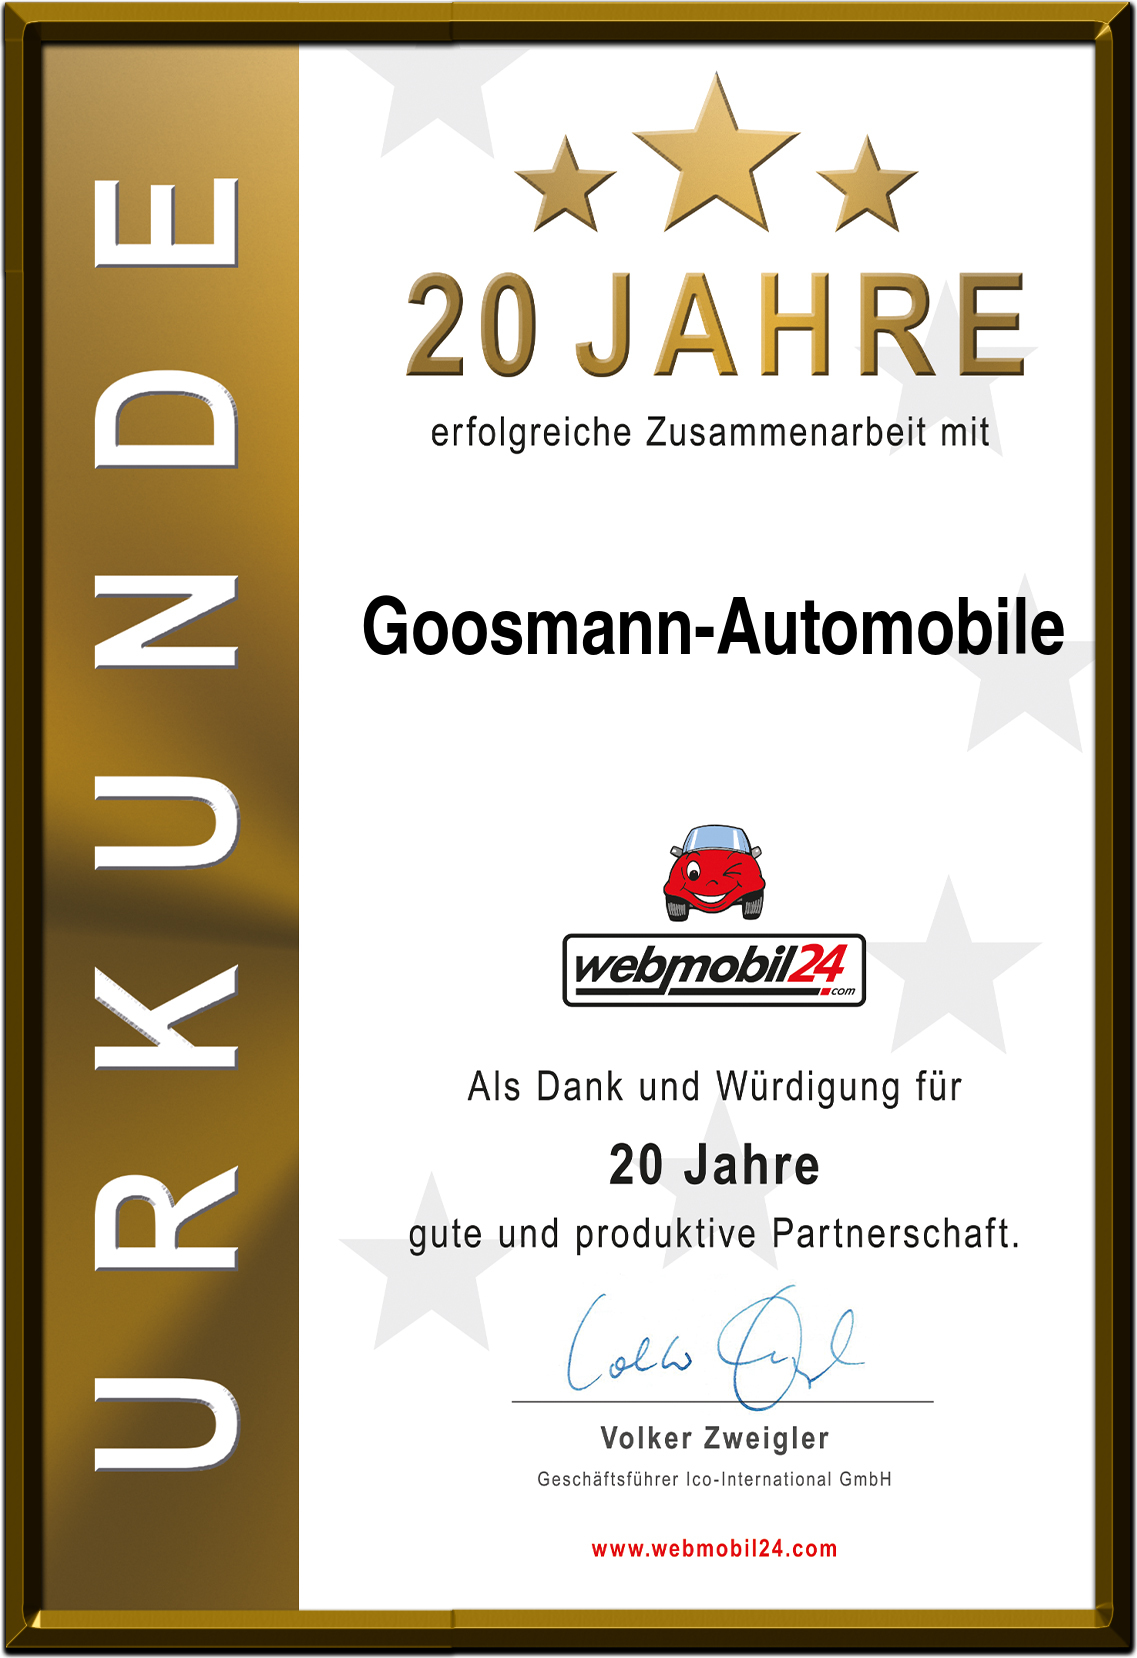 Goosmann-Automobile